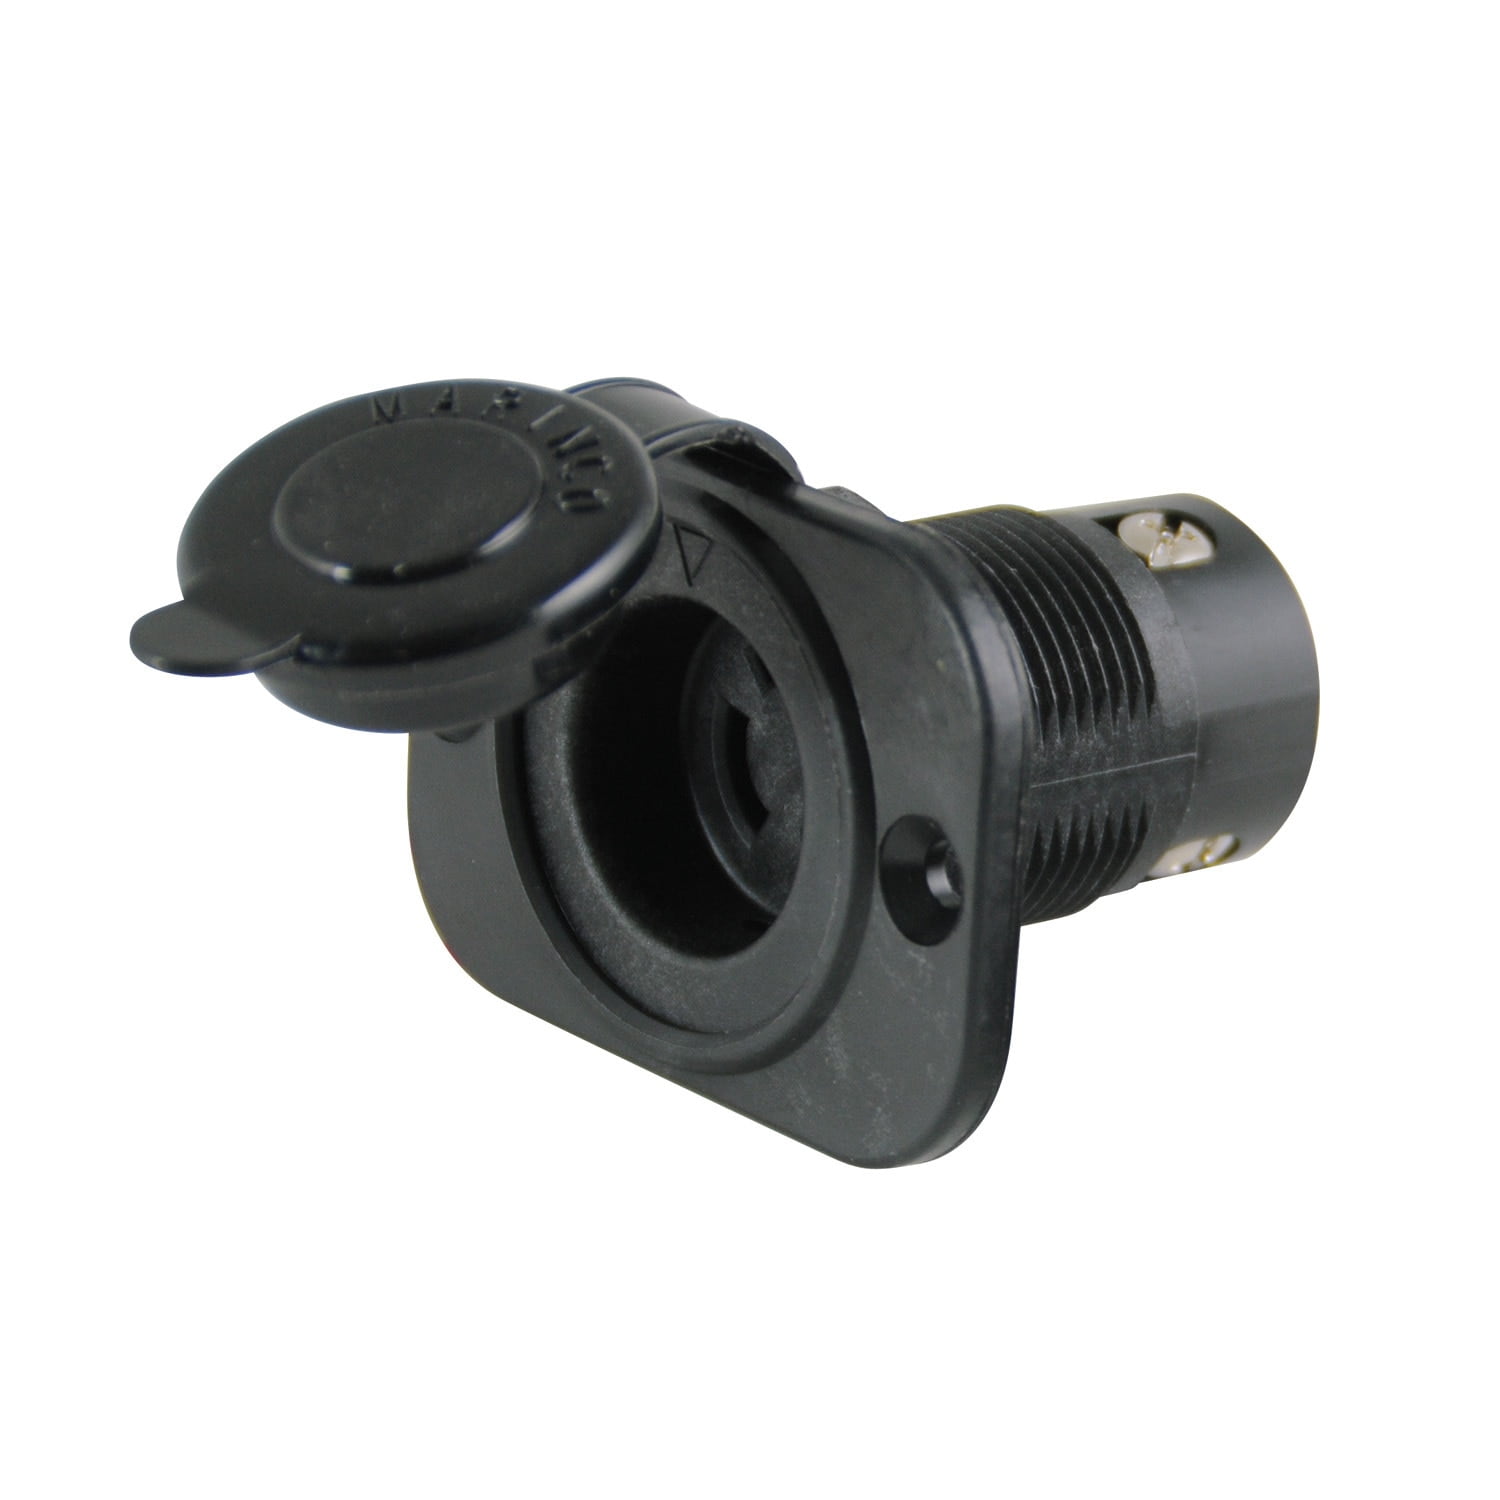 Marinco Pro 12VBP 3-wire ConnectPro Plug Black for sale online 